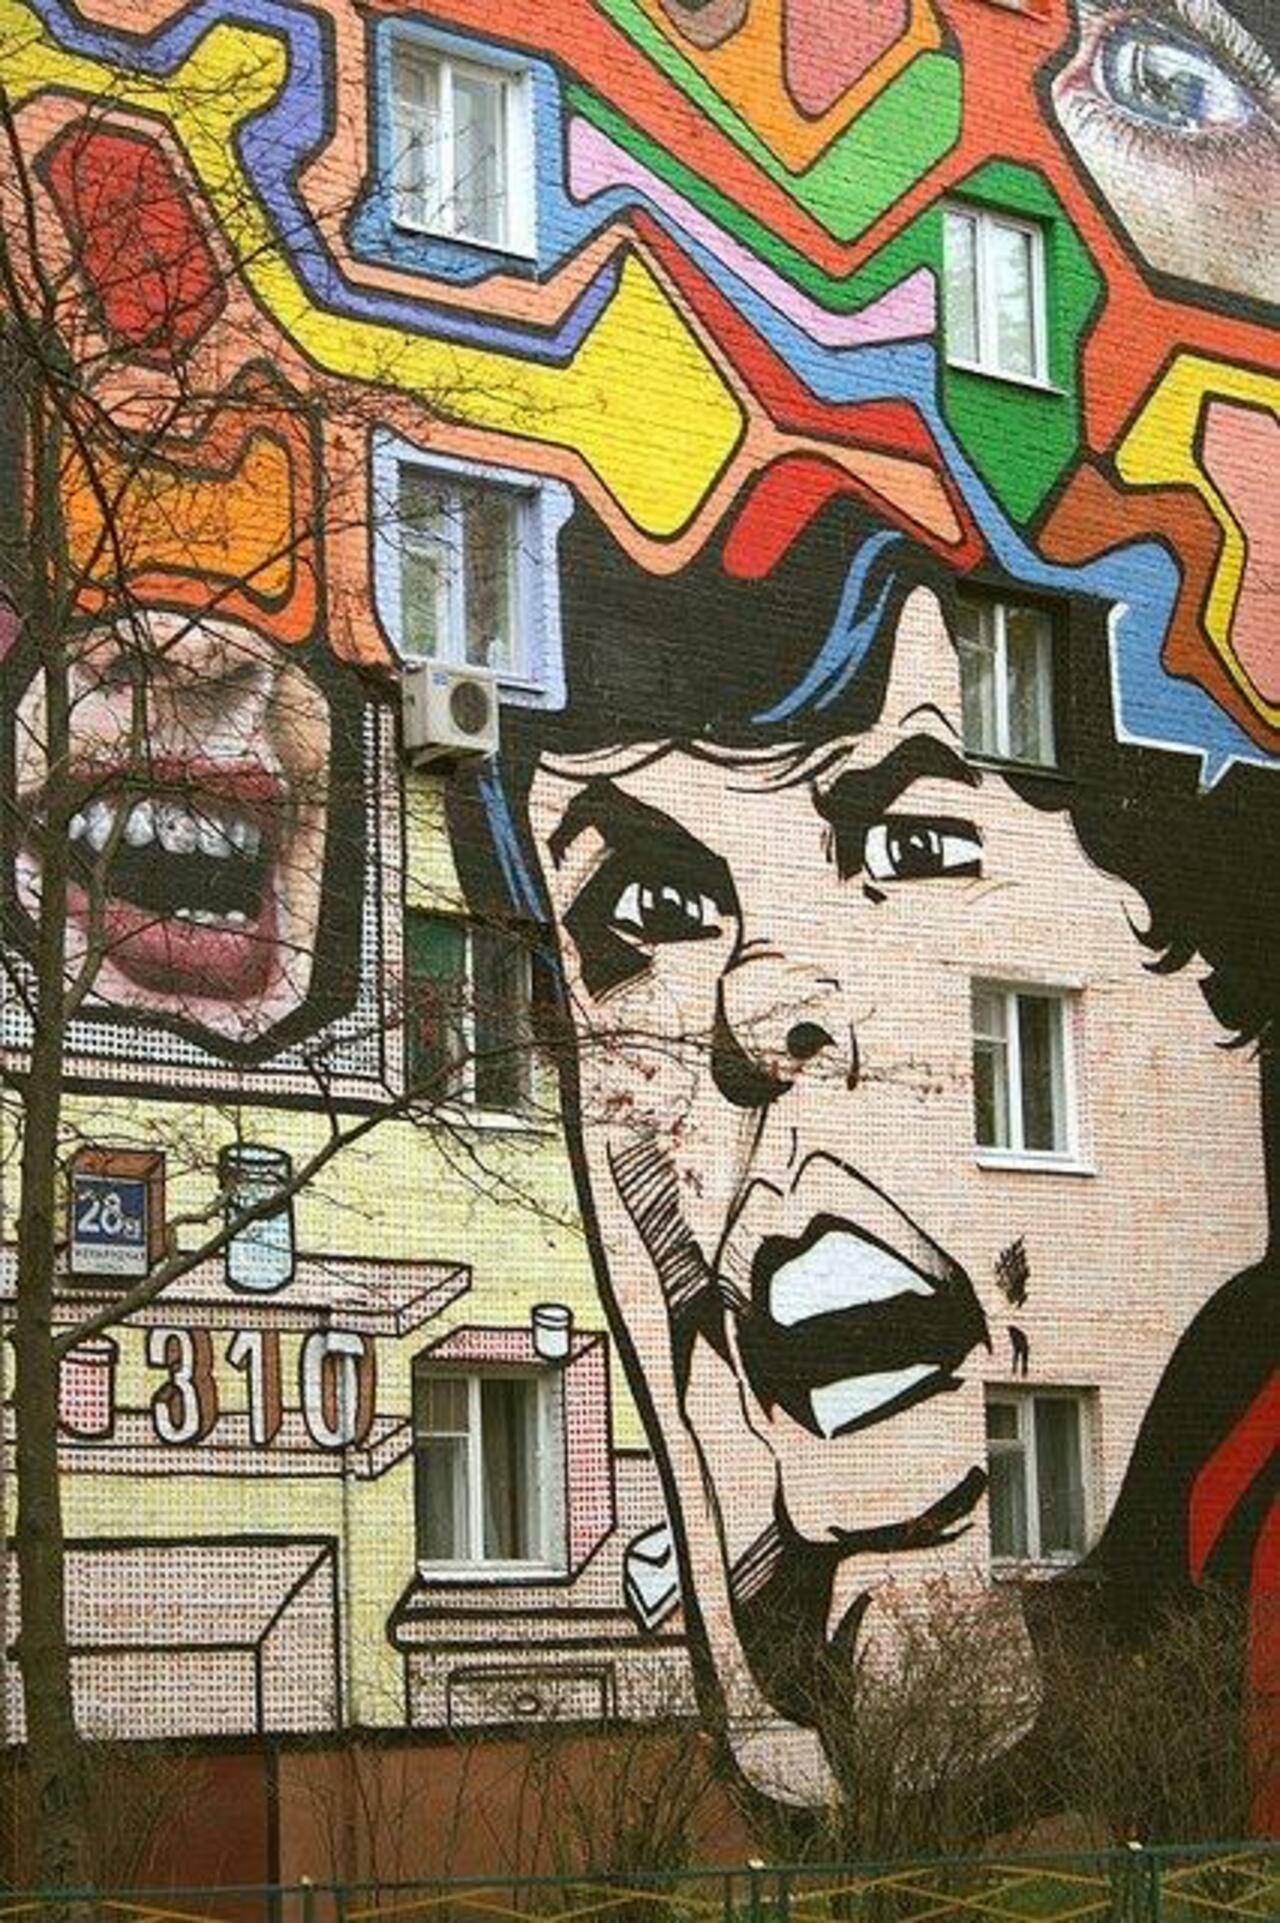 Stepan krasnov - Moscou
#streetart #art #graffiti #mural http://t.co/BiAtuFmmWE via @gianni_nigia @Pitchuskita